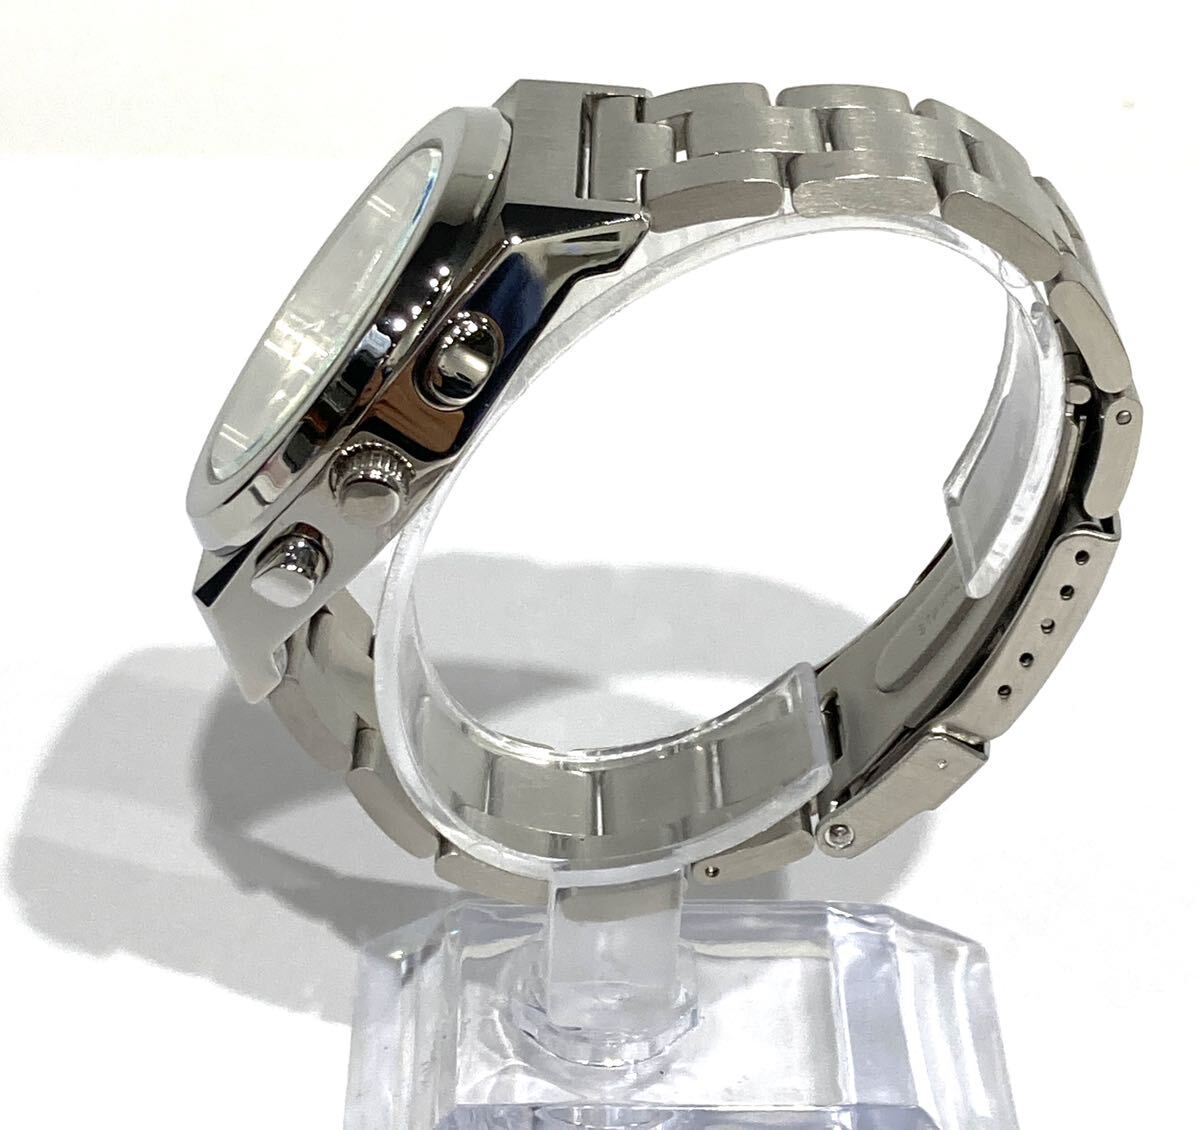 bk-744 TECHNOS テクノス メンズ腕時計 クロノグラフ スイス シルバー文字盤 稼働品 箱 説明書 保証書 コマ付き(O159-6)_画像4